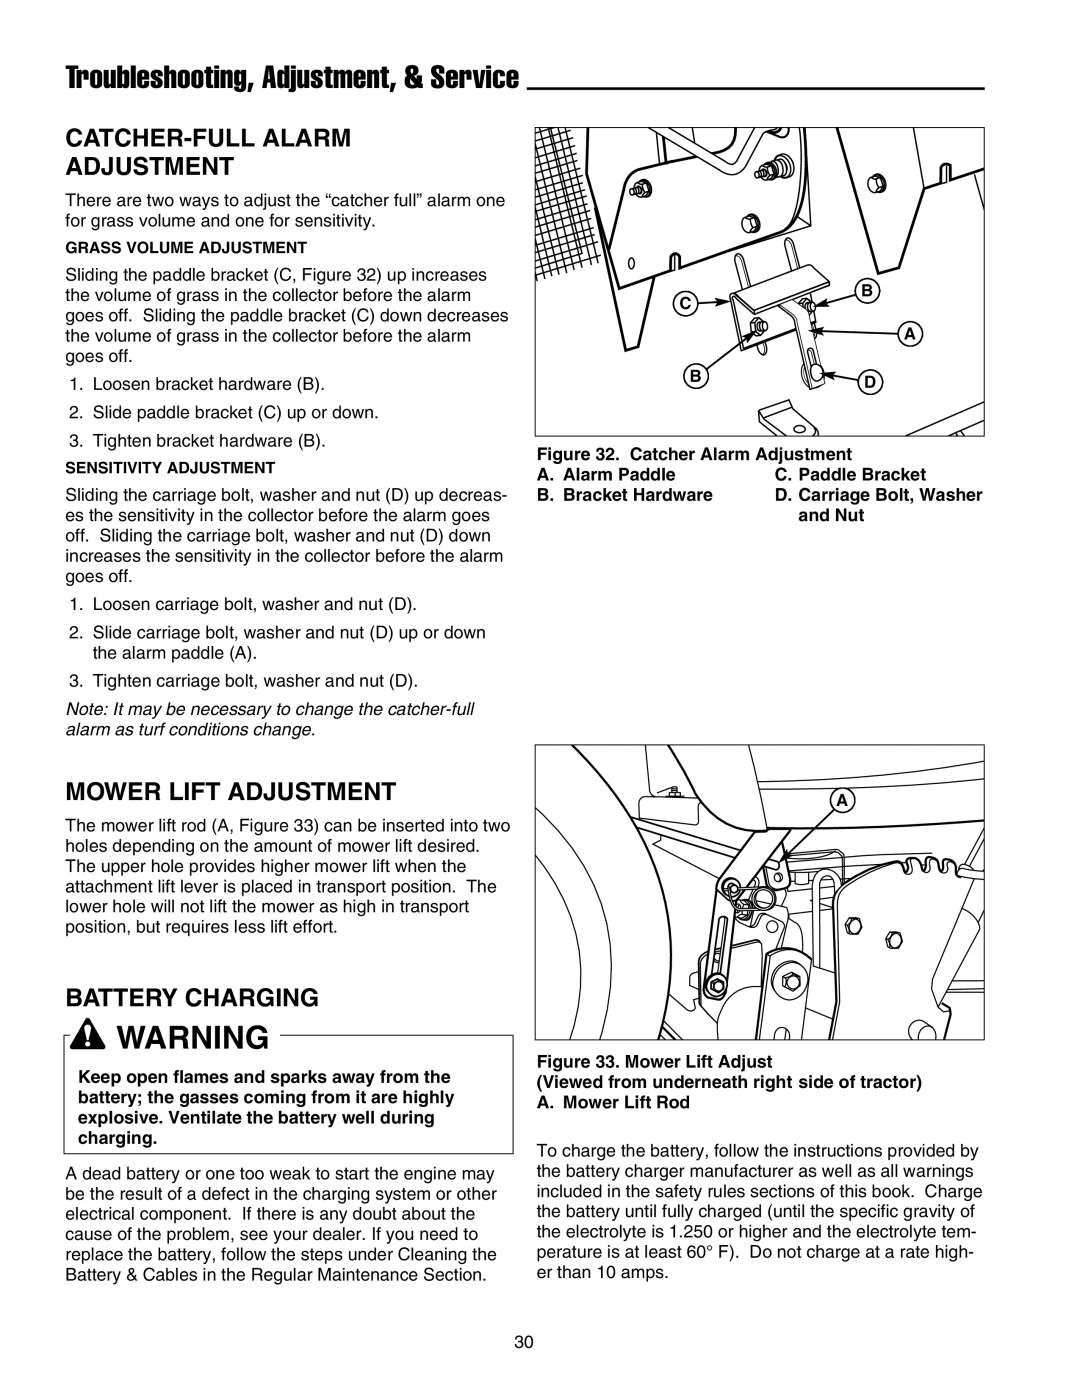 Snapper XL Series manual Troubleshooting, Adjustment, & Service, Catcher-Full Alarm Adjustment, Mower Lift Adjustment 